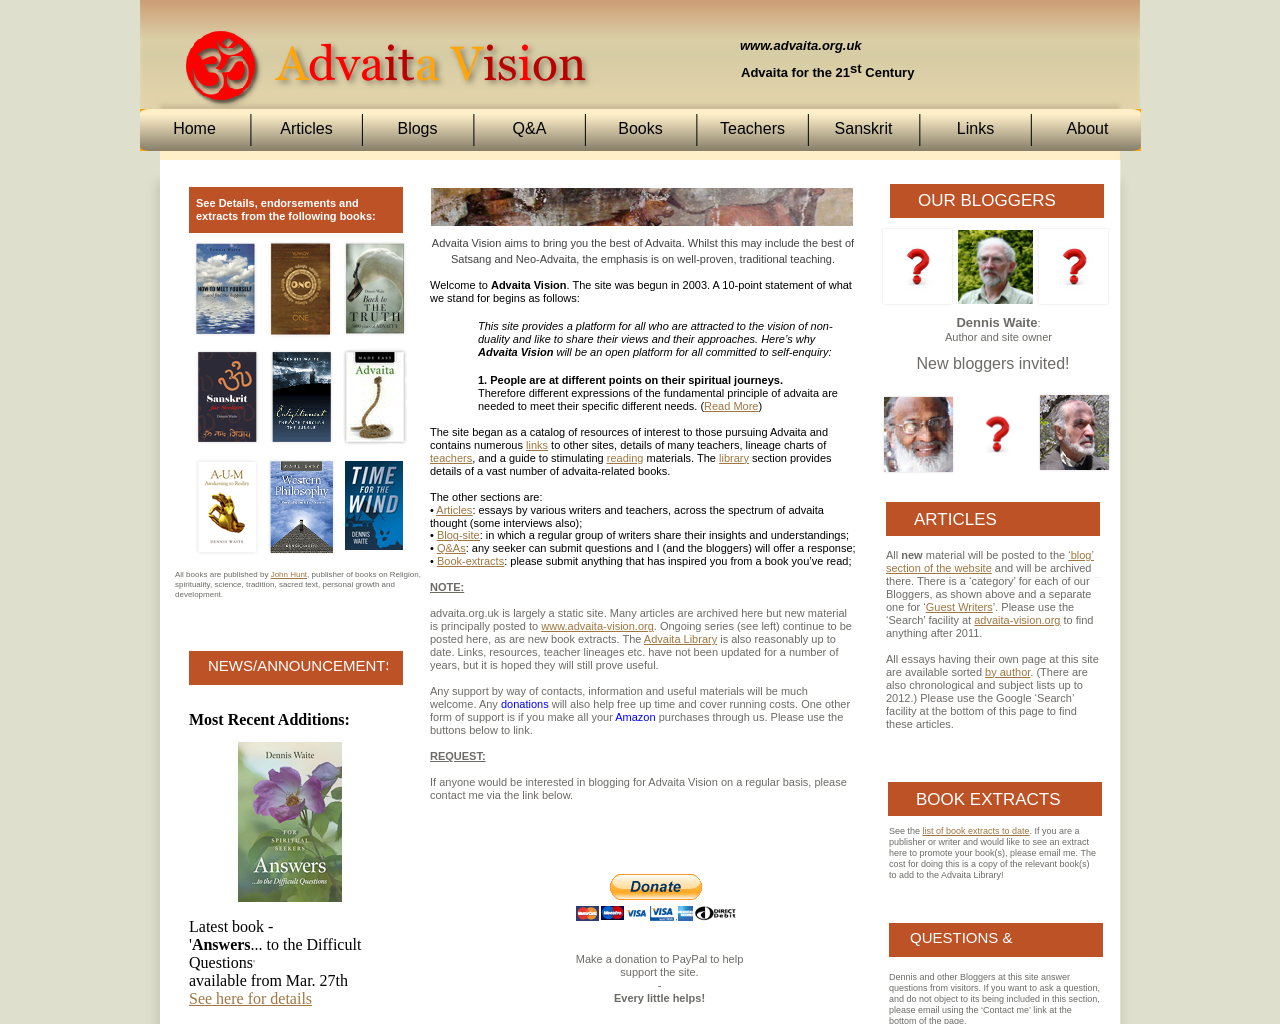 advaita.org.uk